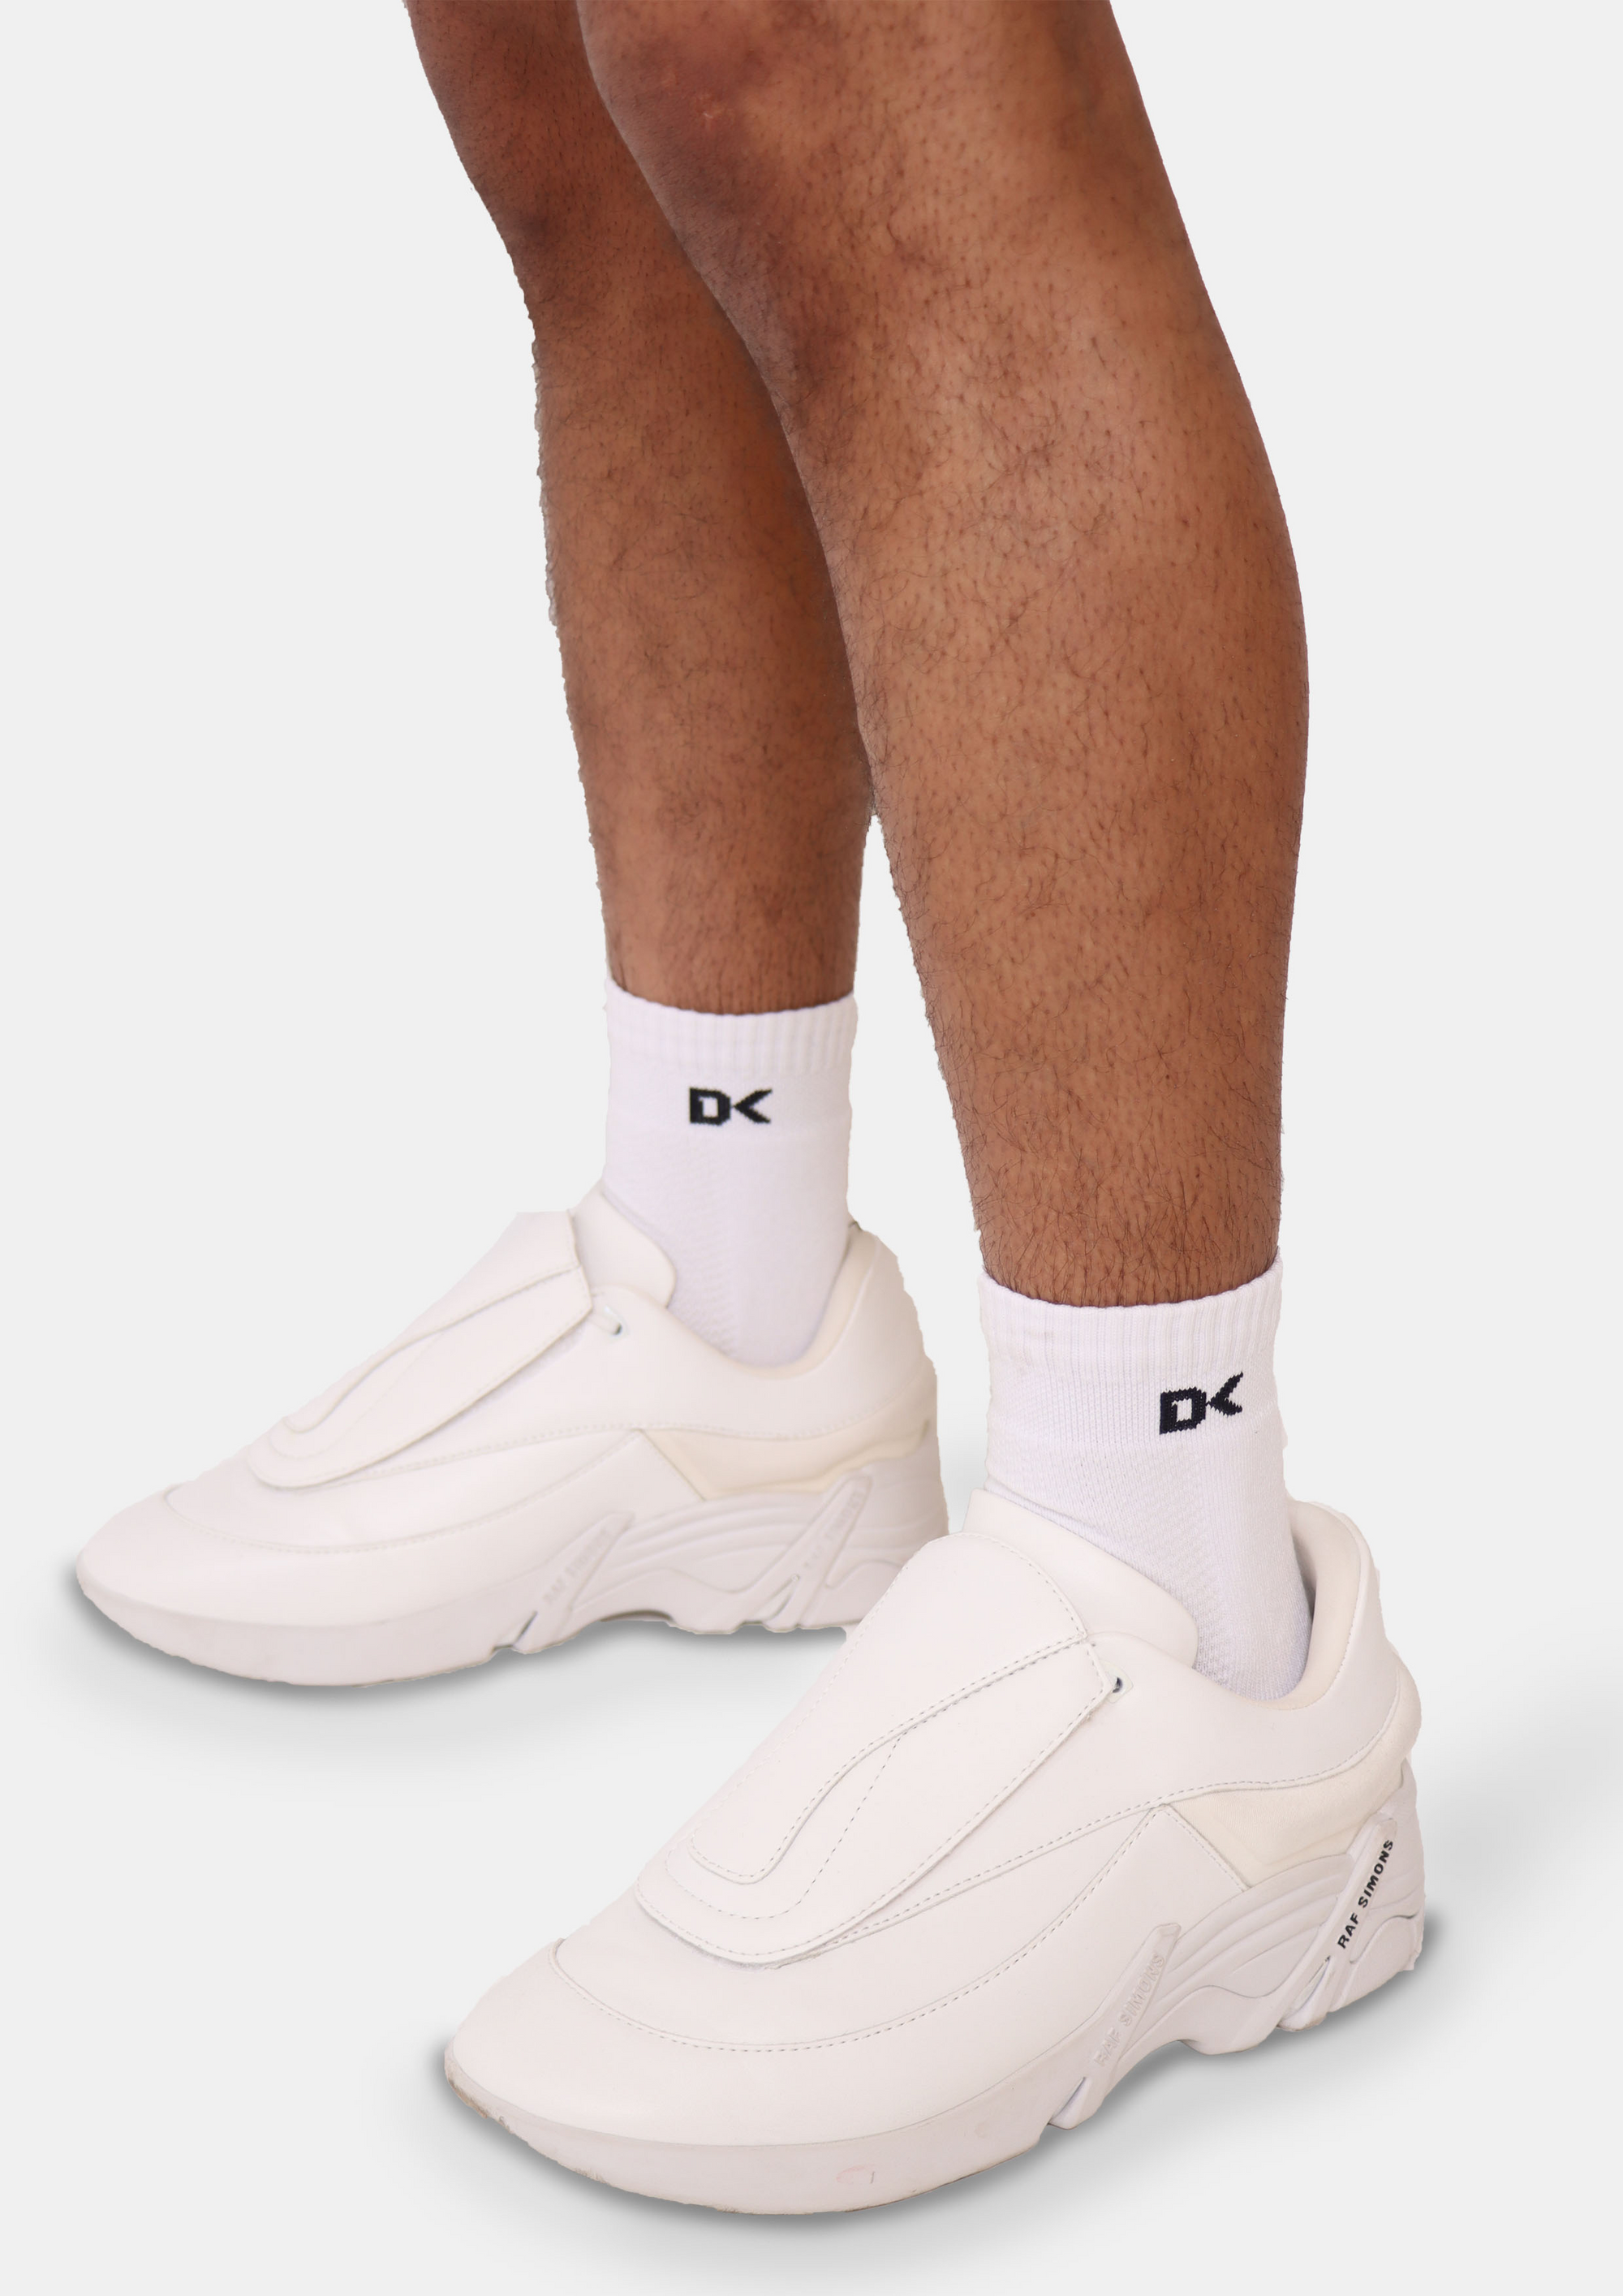 DK High Ankle Sports Socks (White) - DK Sports